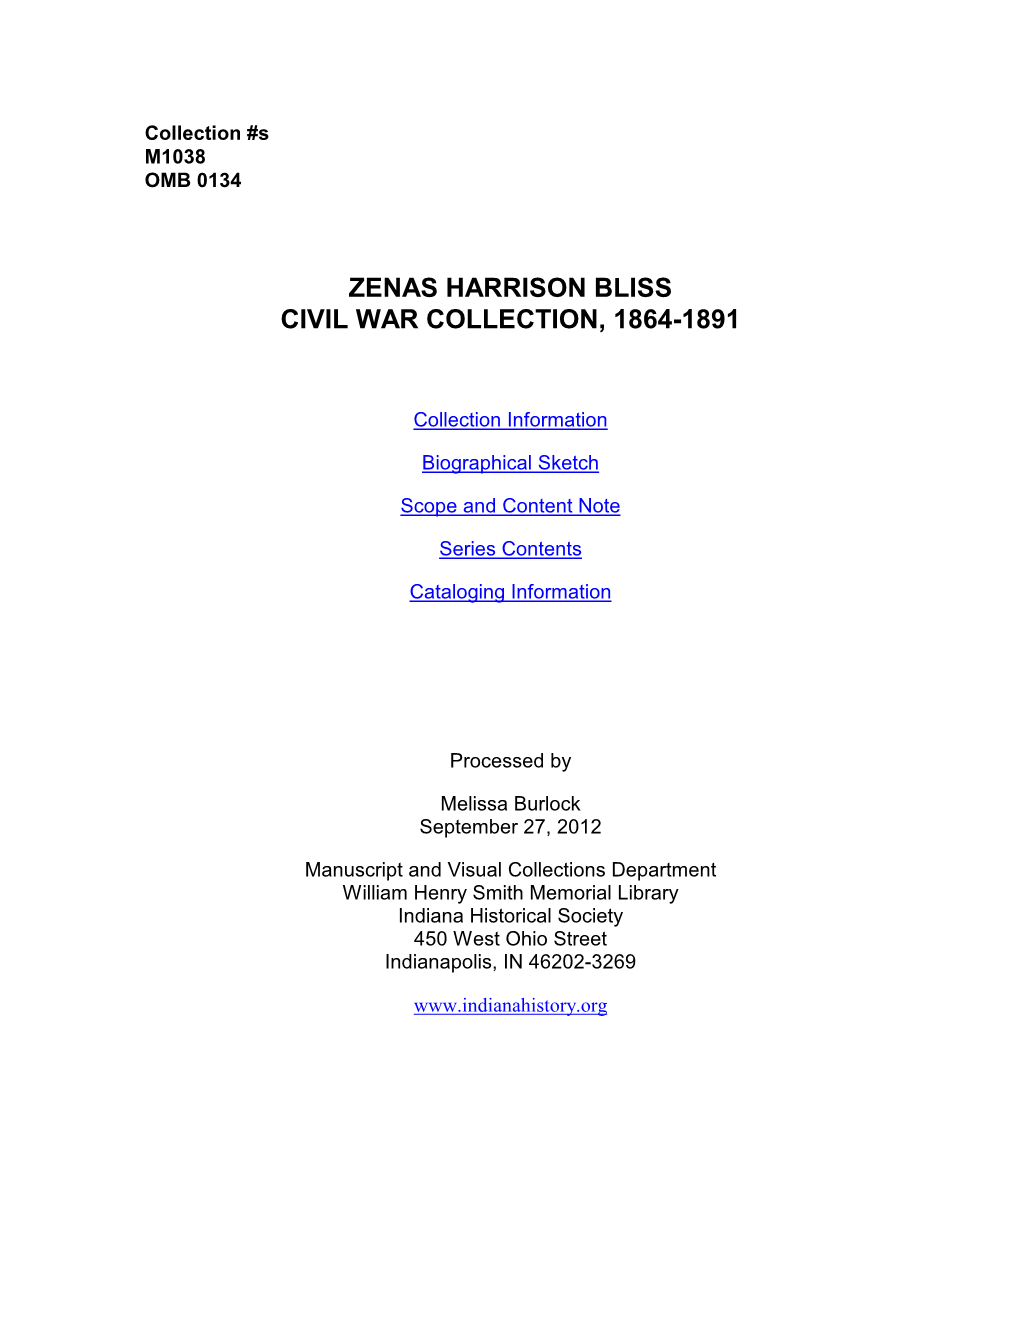 Zenas H. Bliss Civil War Collection